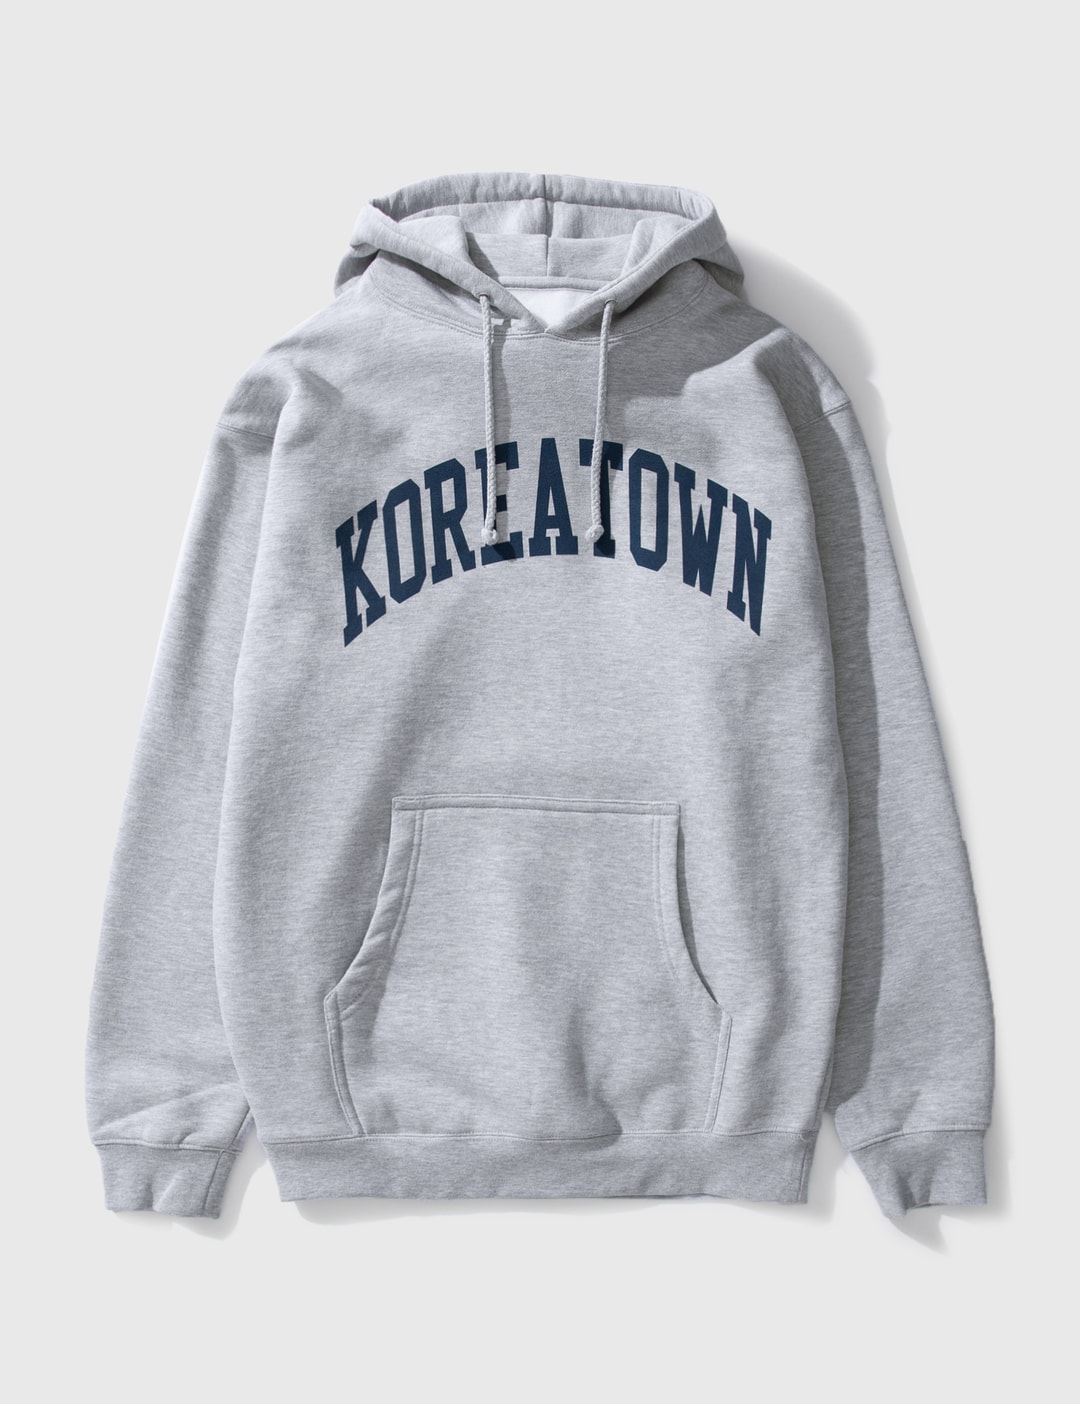 Koreatown - Koreatown Logo Hoodie | HBX - Globally Curated Fashion and ...